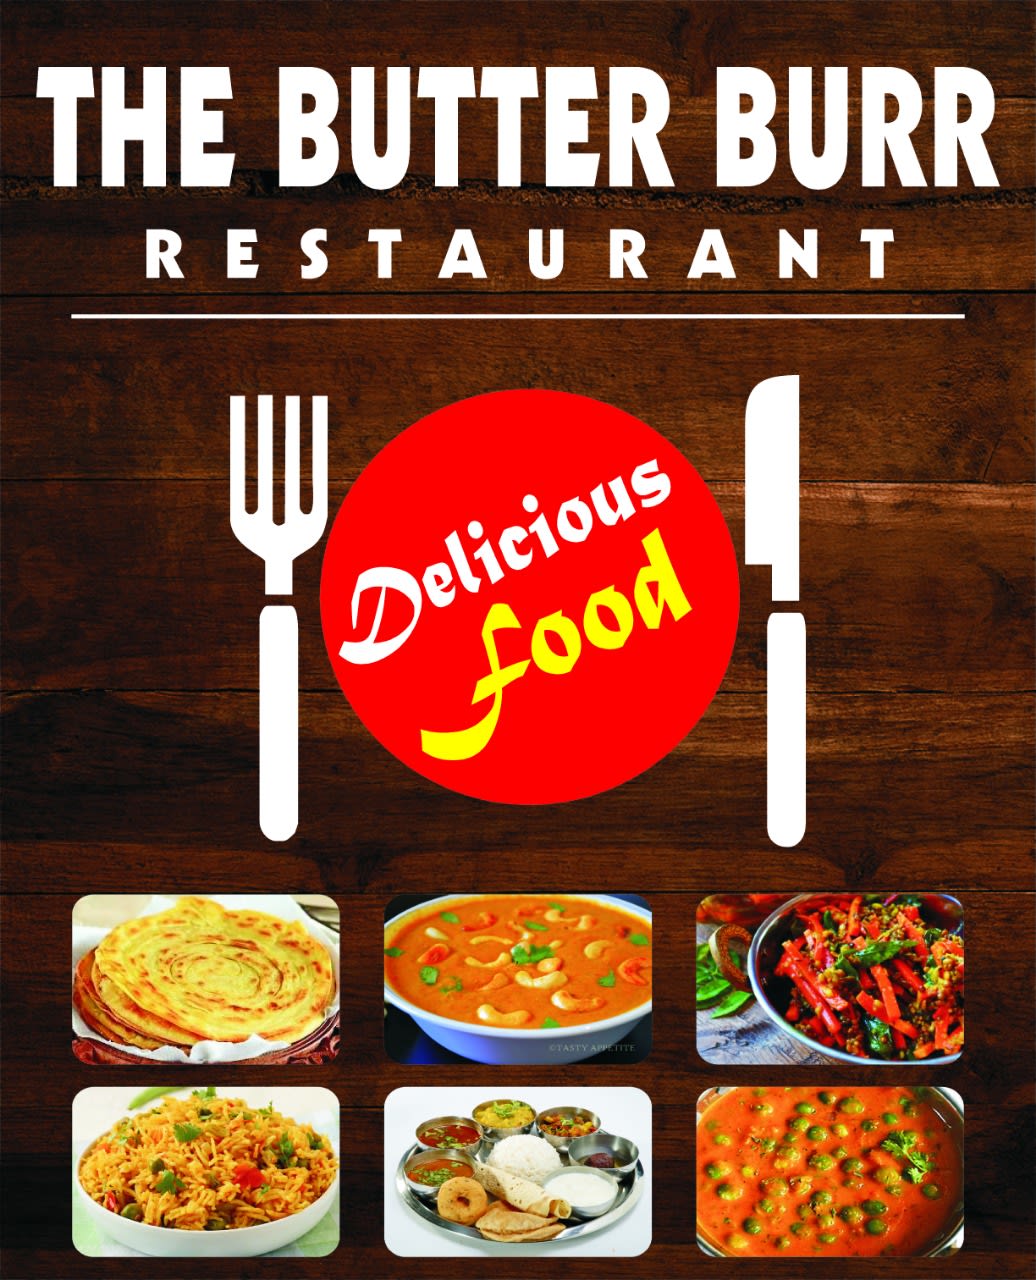 The Butter Burr Restaurant